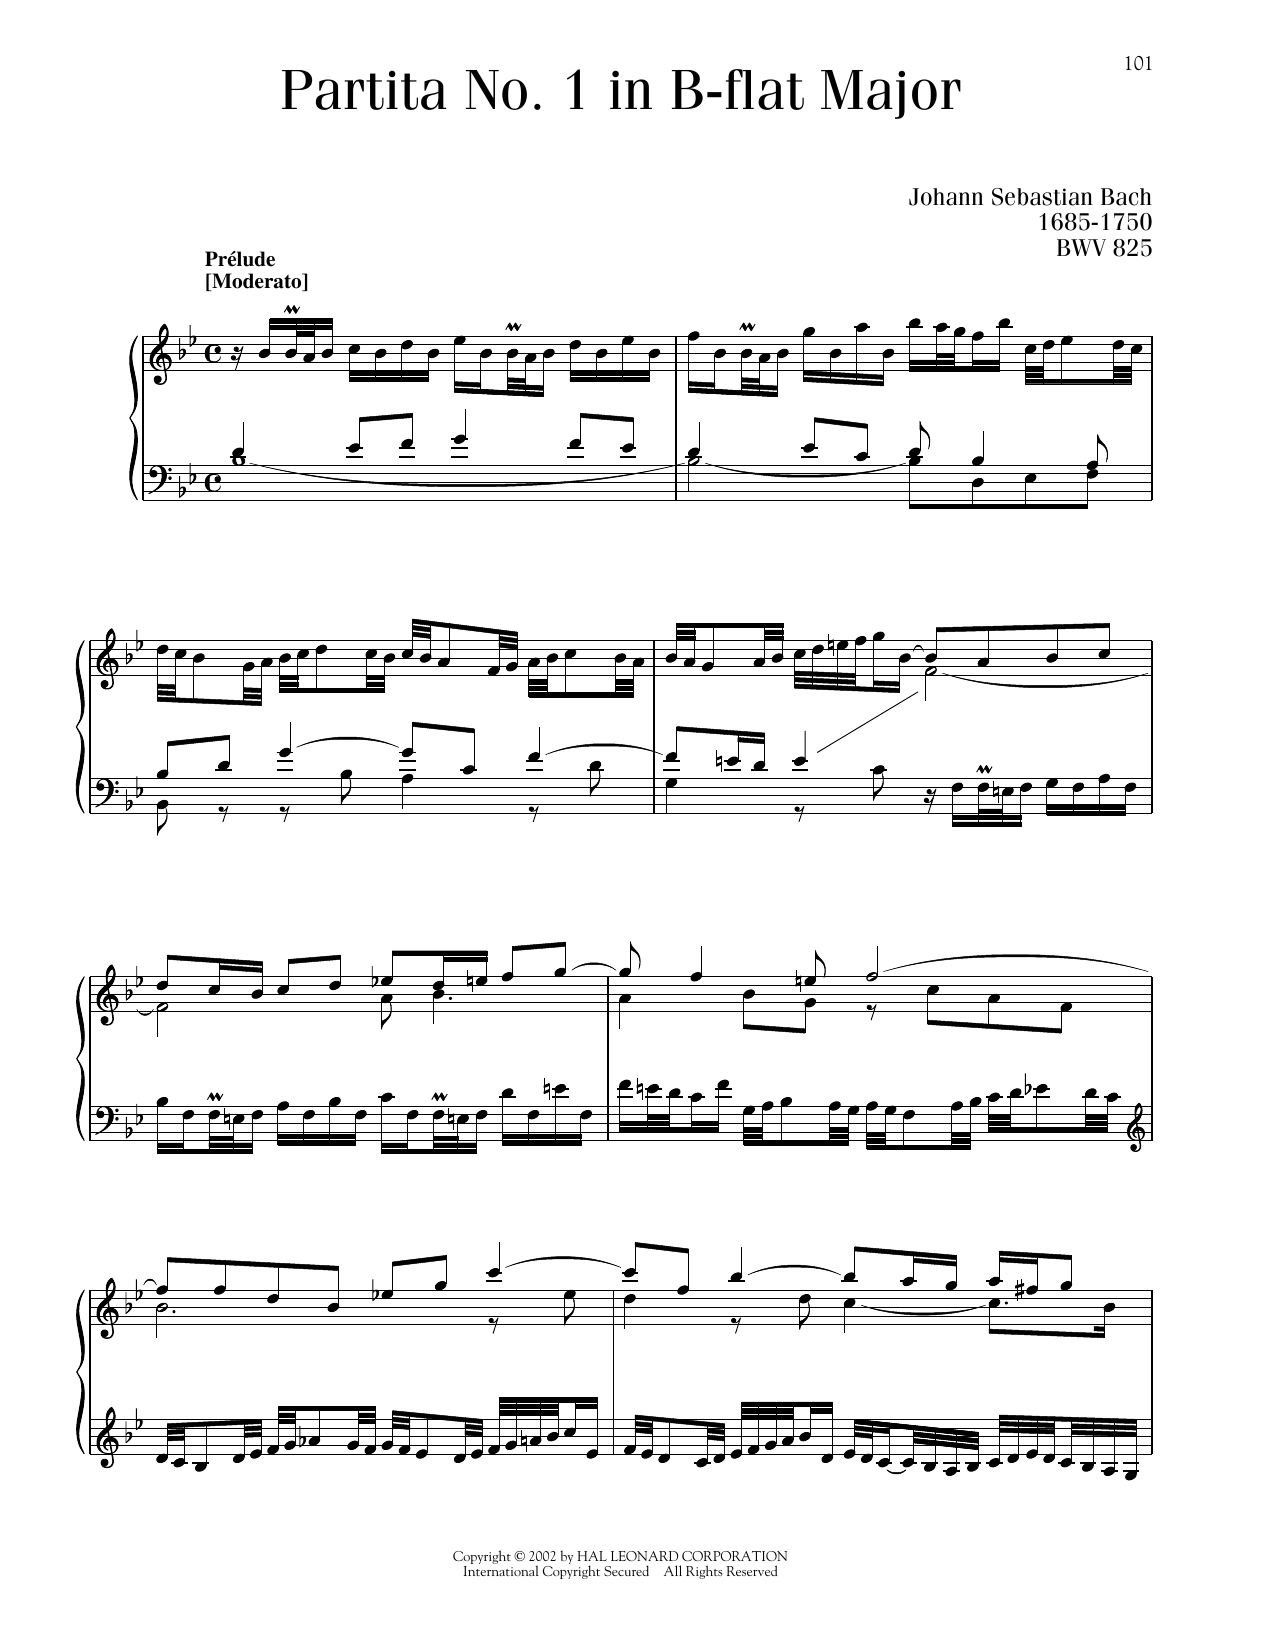 Johann Sebastian Bach Partita No. 1 In B-Flat Major, BWV 825 Sheet Music Notes & Chords for Piano Solo - Download or Print PDF